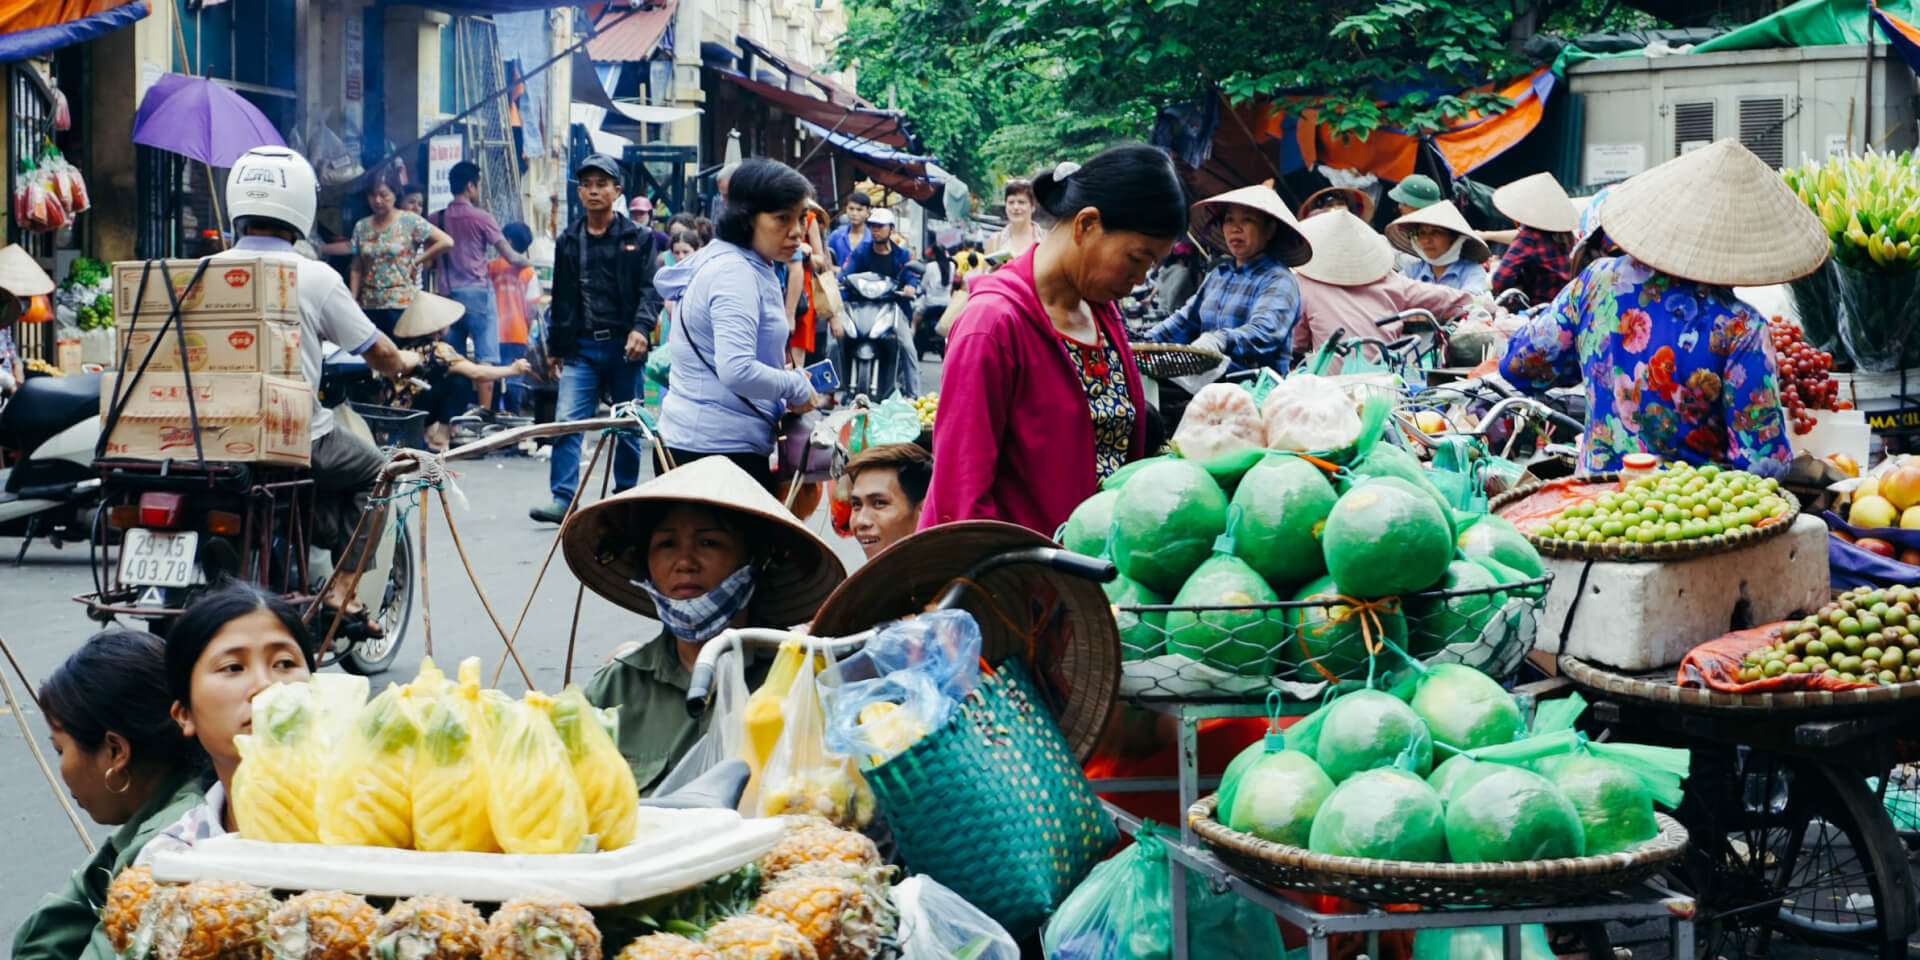 Busy market in Hanoi, Vietnam